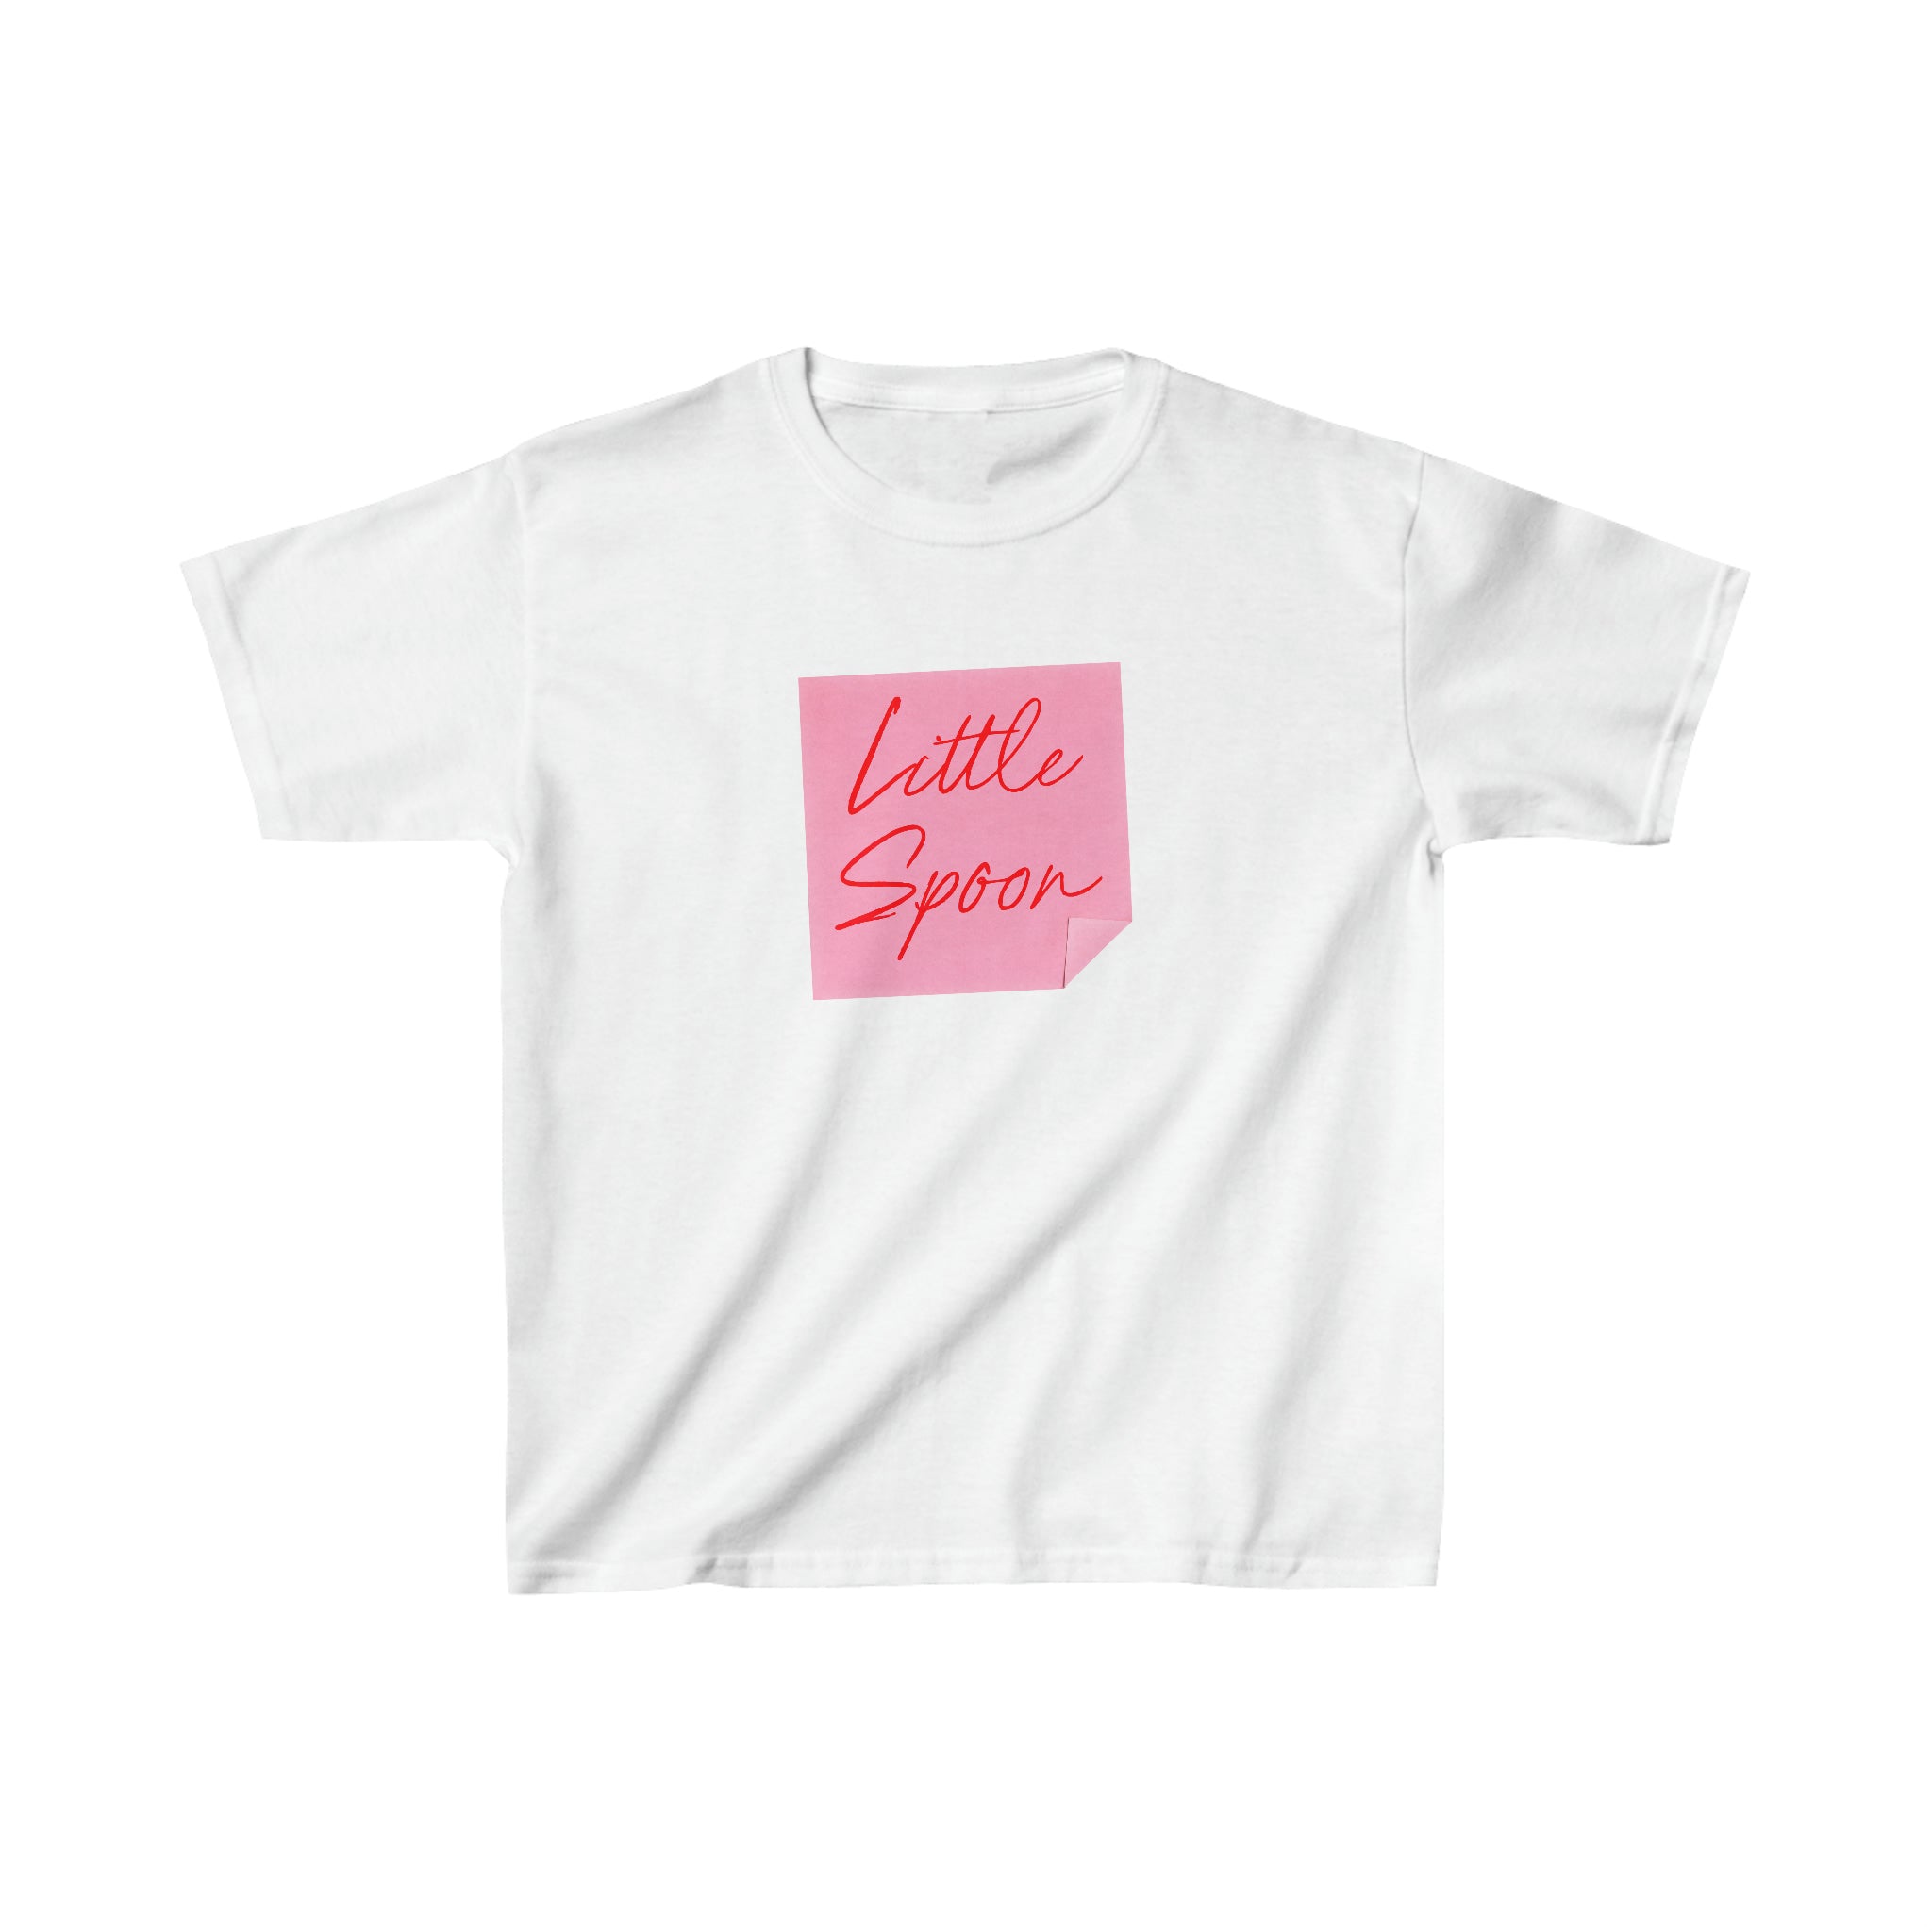 'Little Spoon' baby tee - In Print We Trust